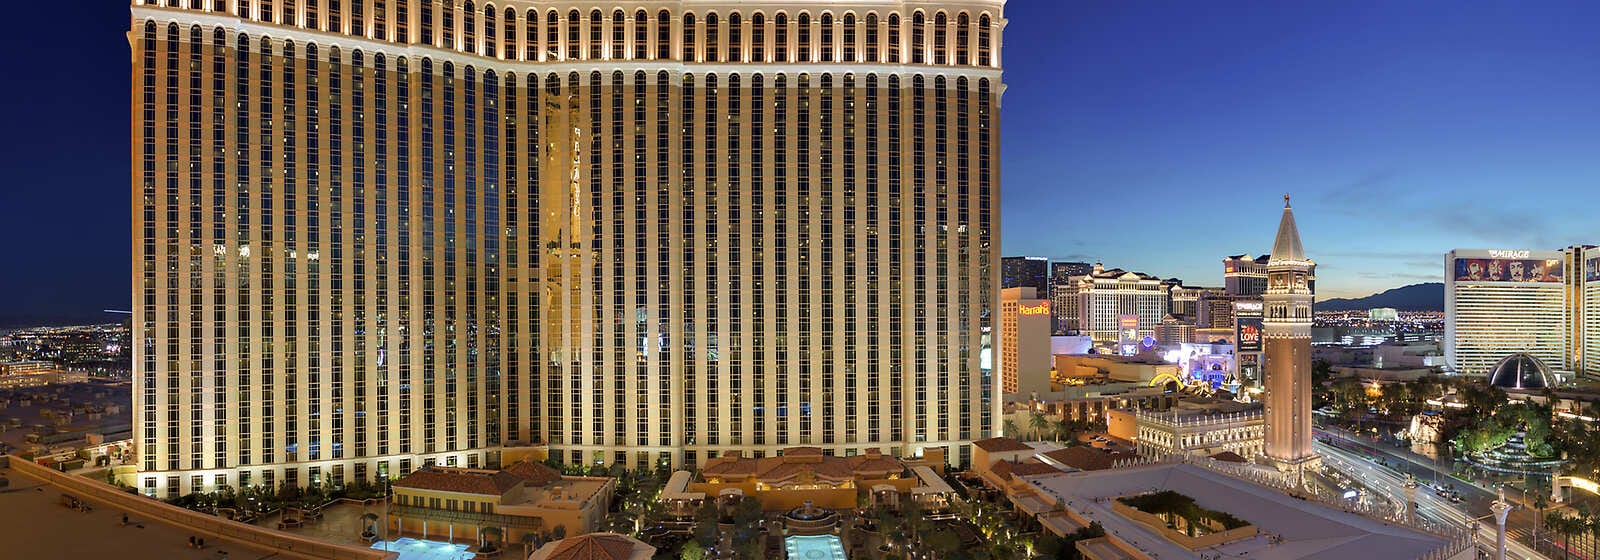 The Venetian Resort Las Vegas | The Hotel Collection | Amex Travel